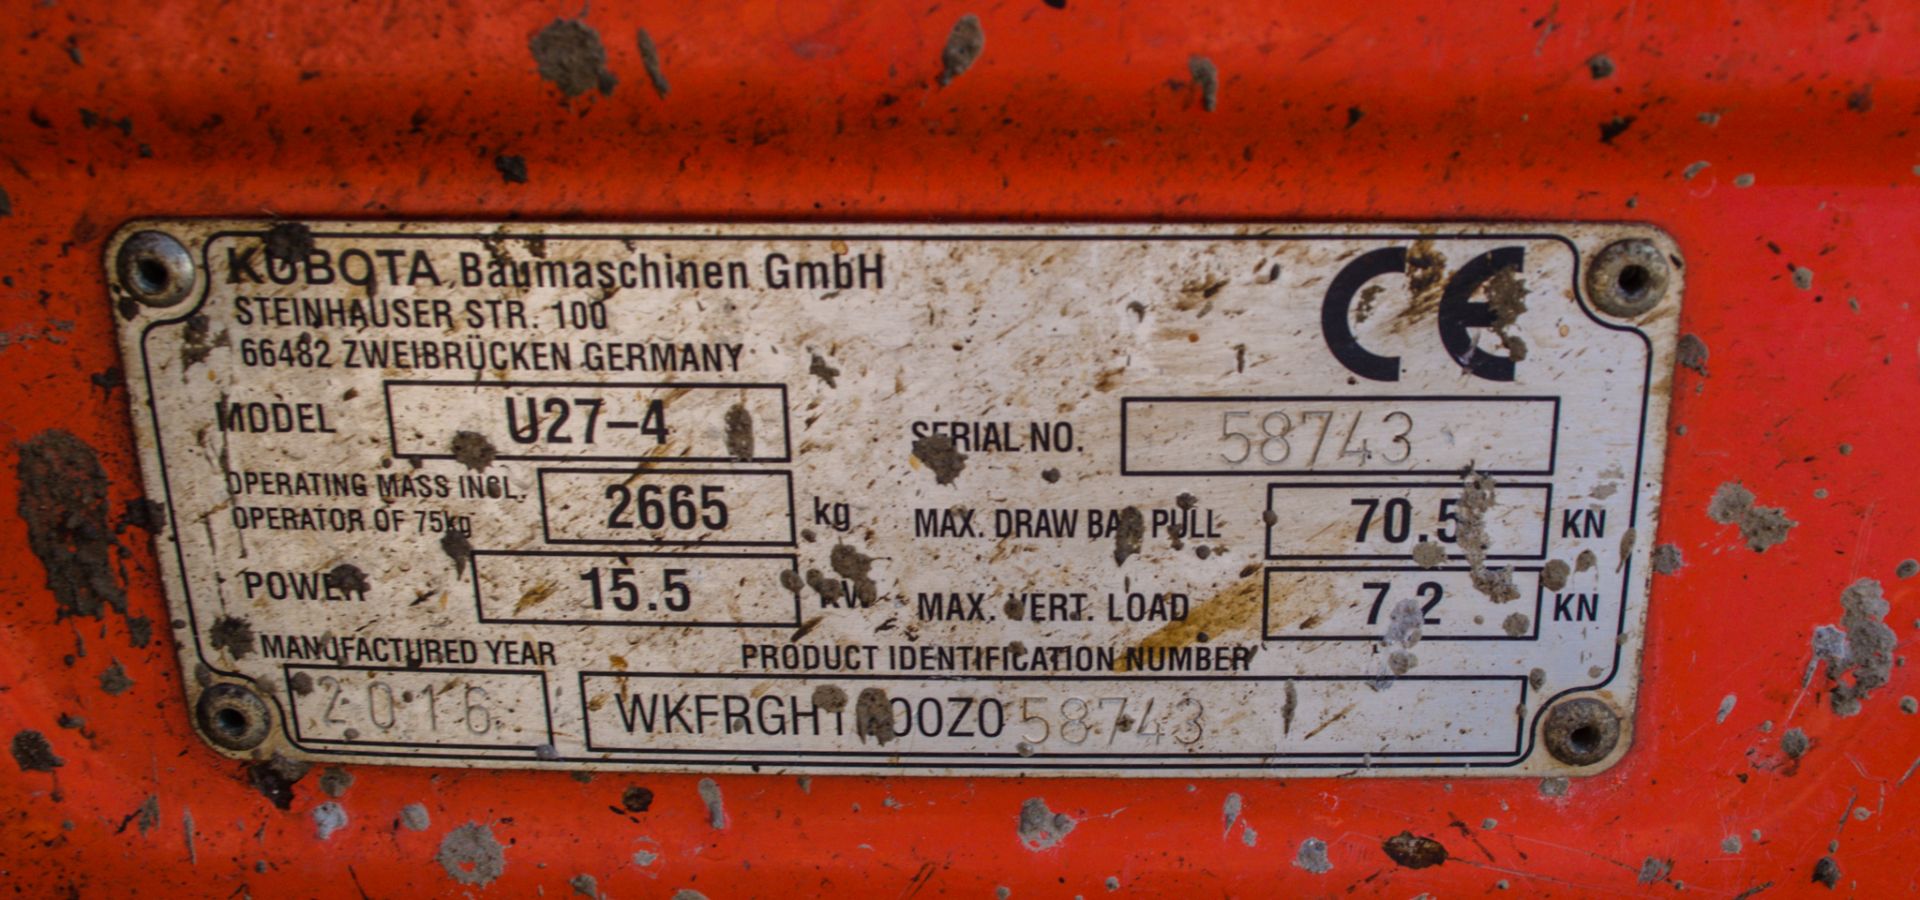 Kubota U27-4 2.7 tonne rubber tracked mini excavator Year: 2016 S/N: 58743 Recorded Hours: 3288 - Image 21 of 21